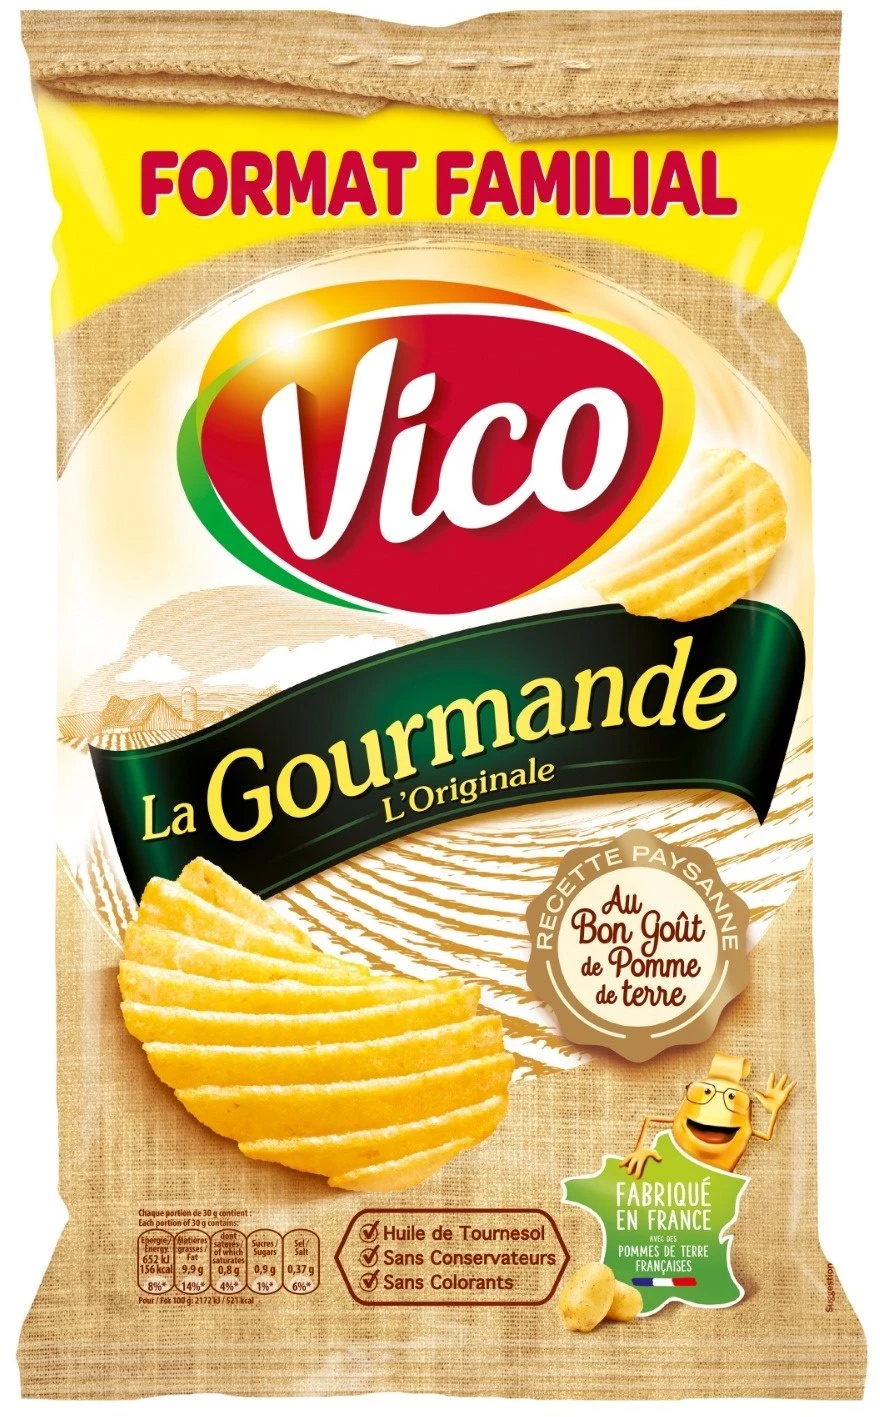 Batatas fritas La Gourmande L'Origina, 200g - VICO